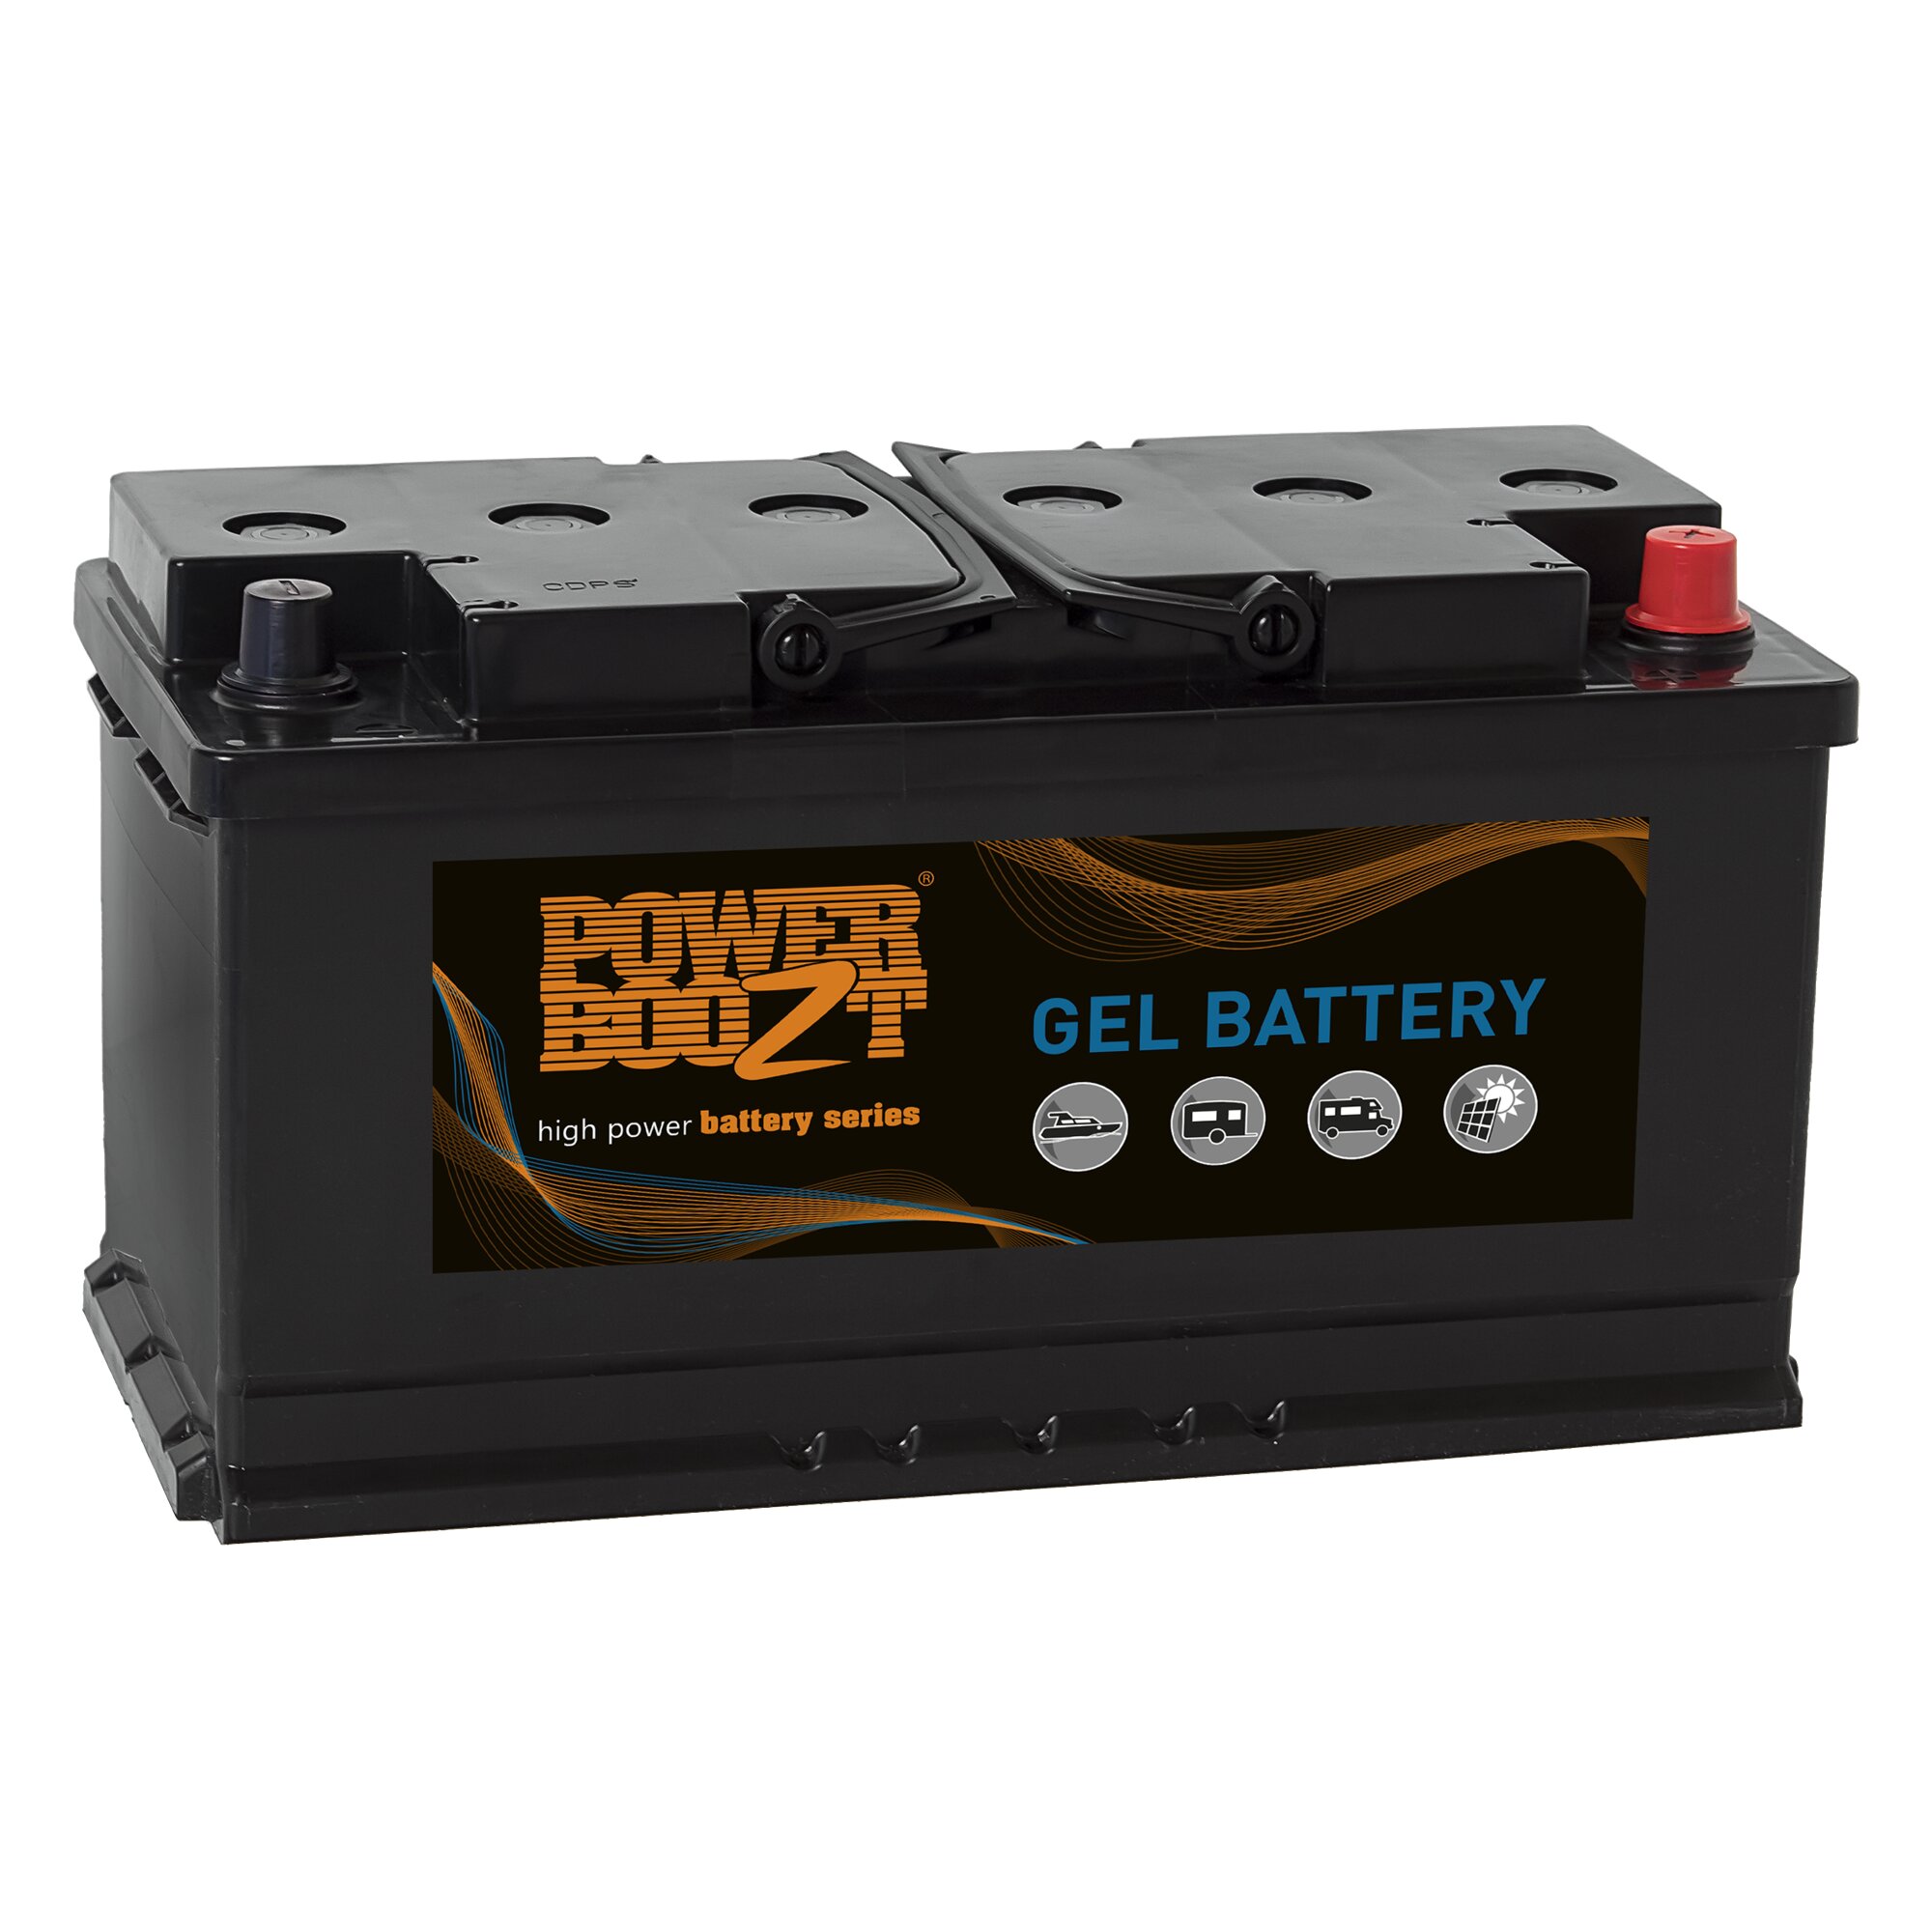 Gel Batterie Powerboozt